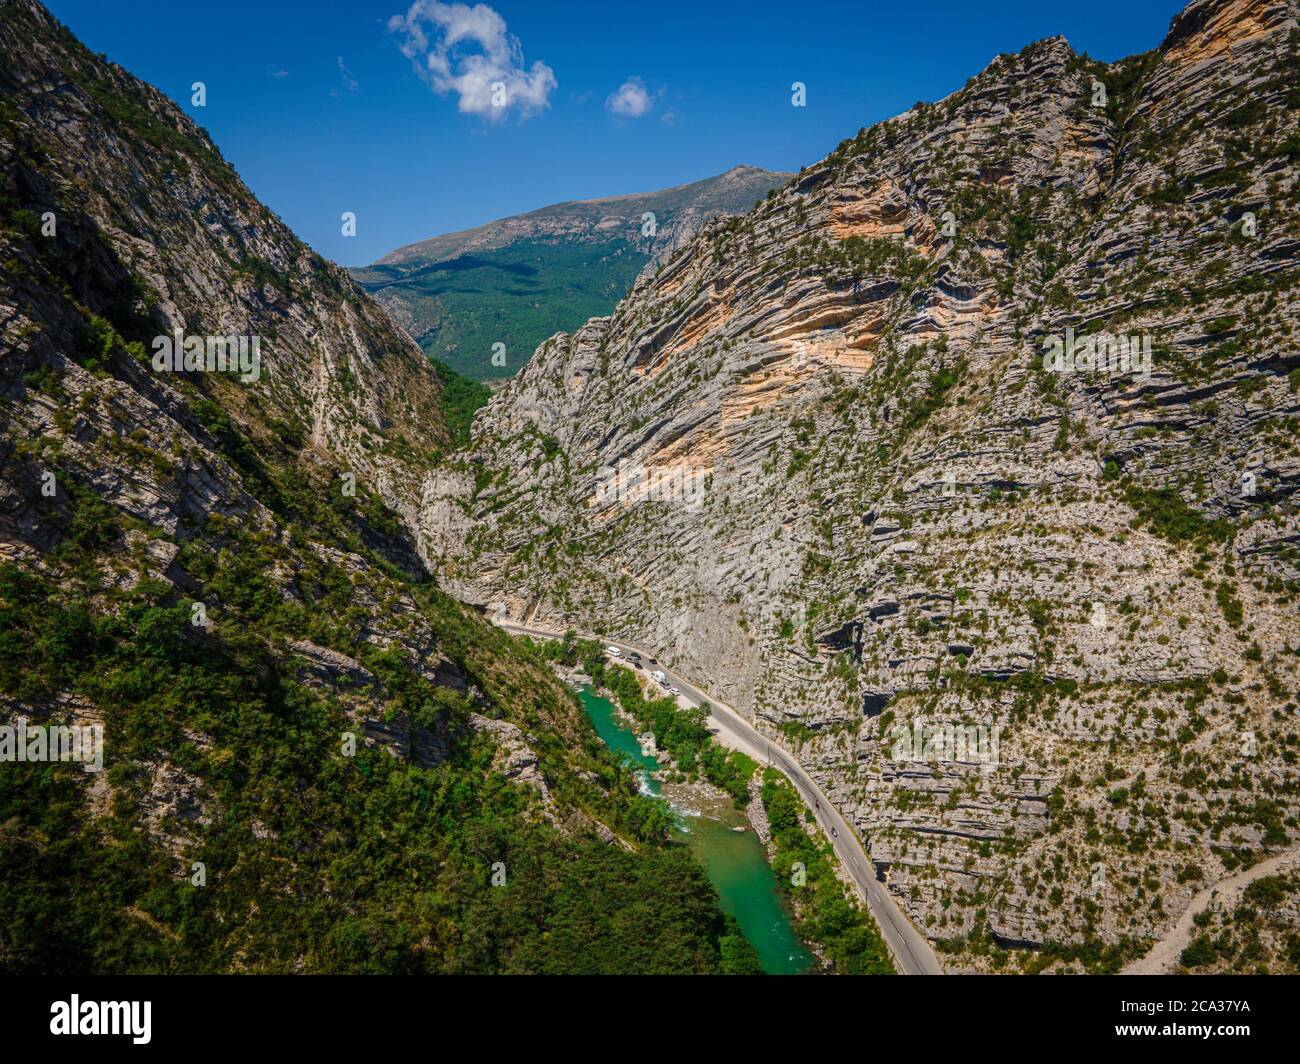 Wonderful nature of France - The Canyon of Verdon - travel photography. Stock Photo